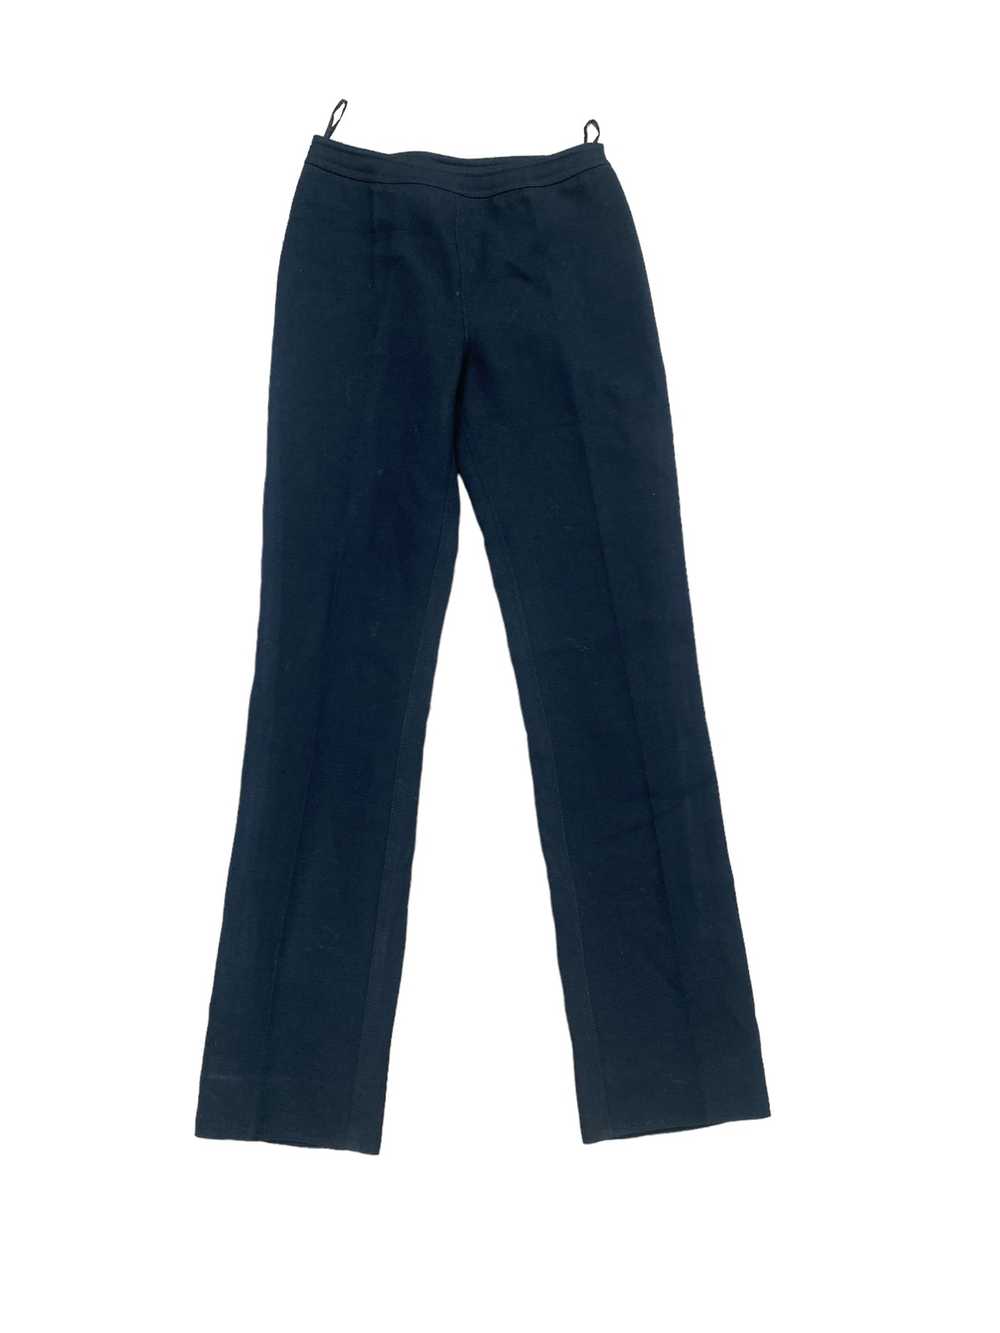 Courreges Vintage Black Wool Pants - image 1